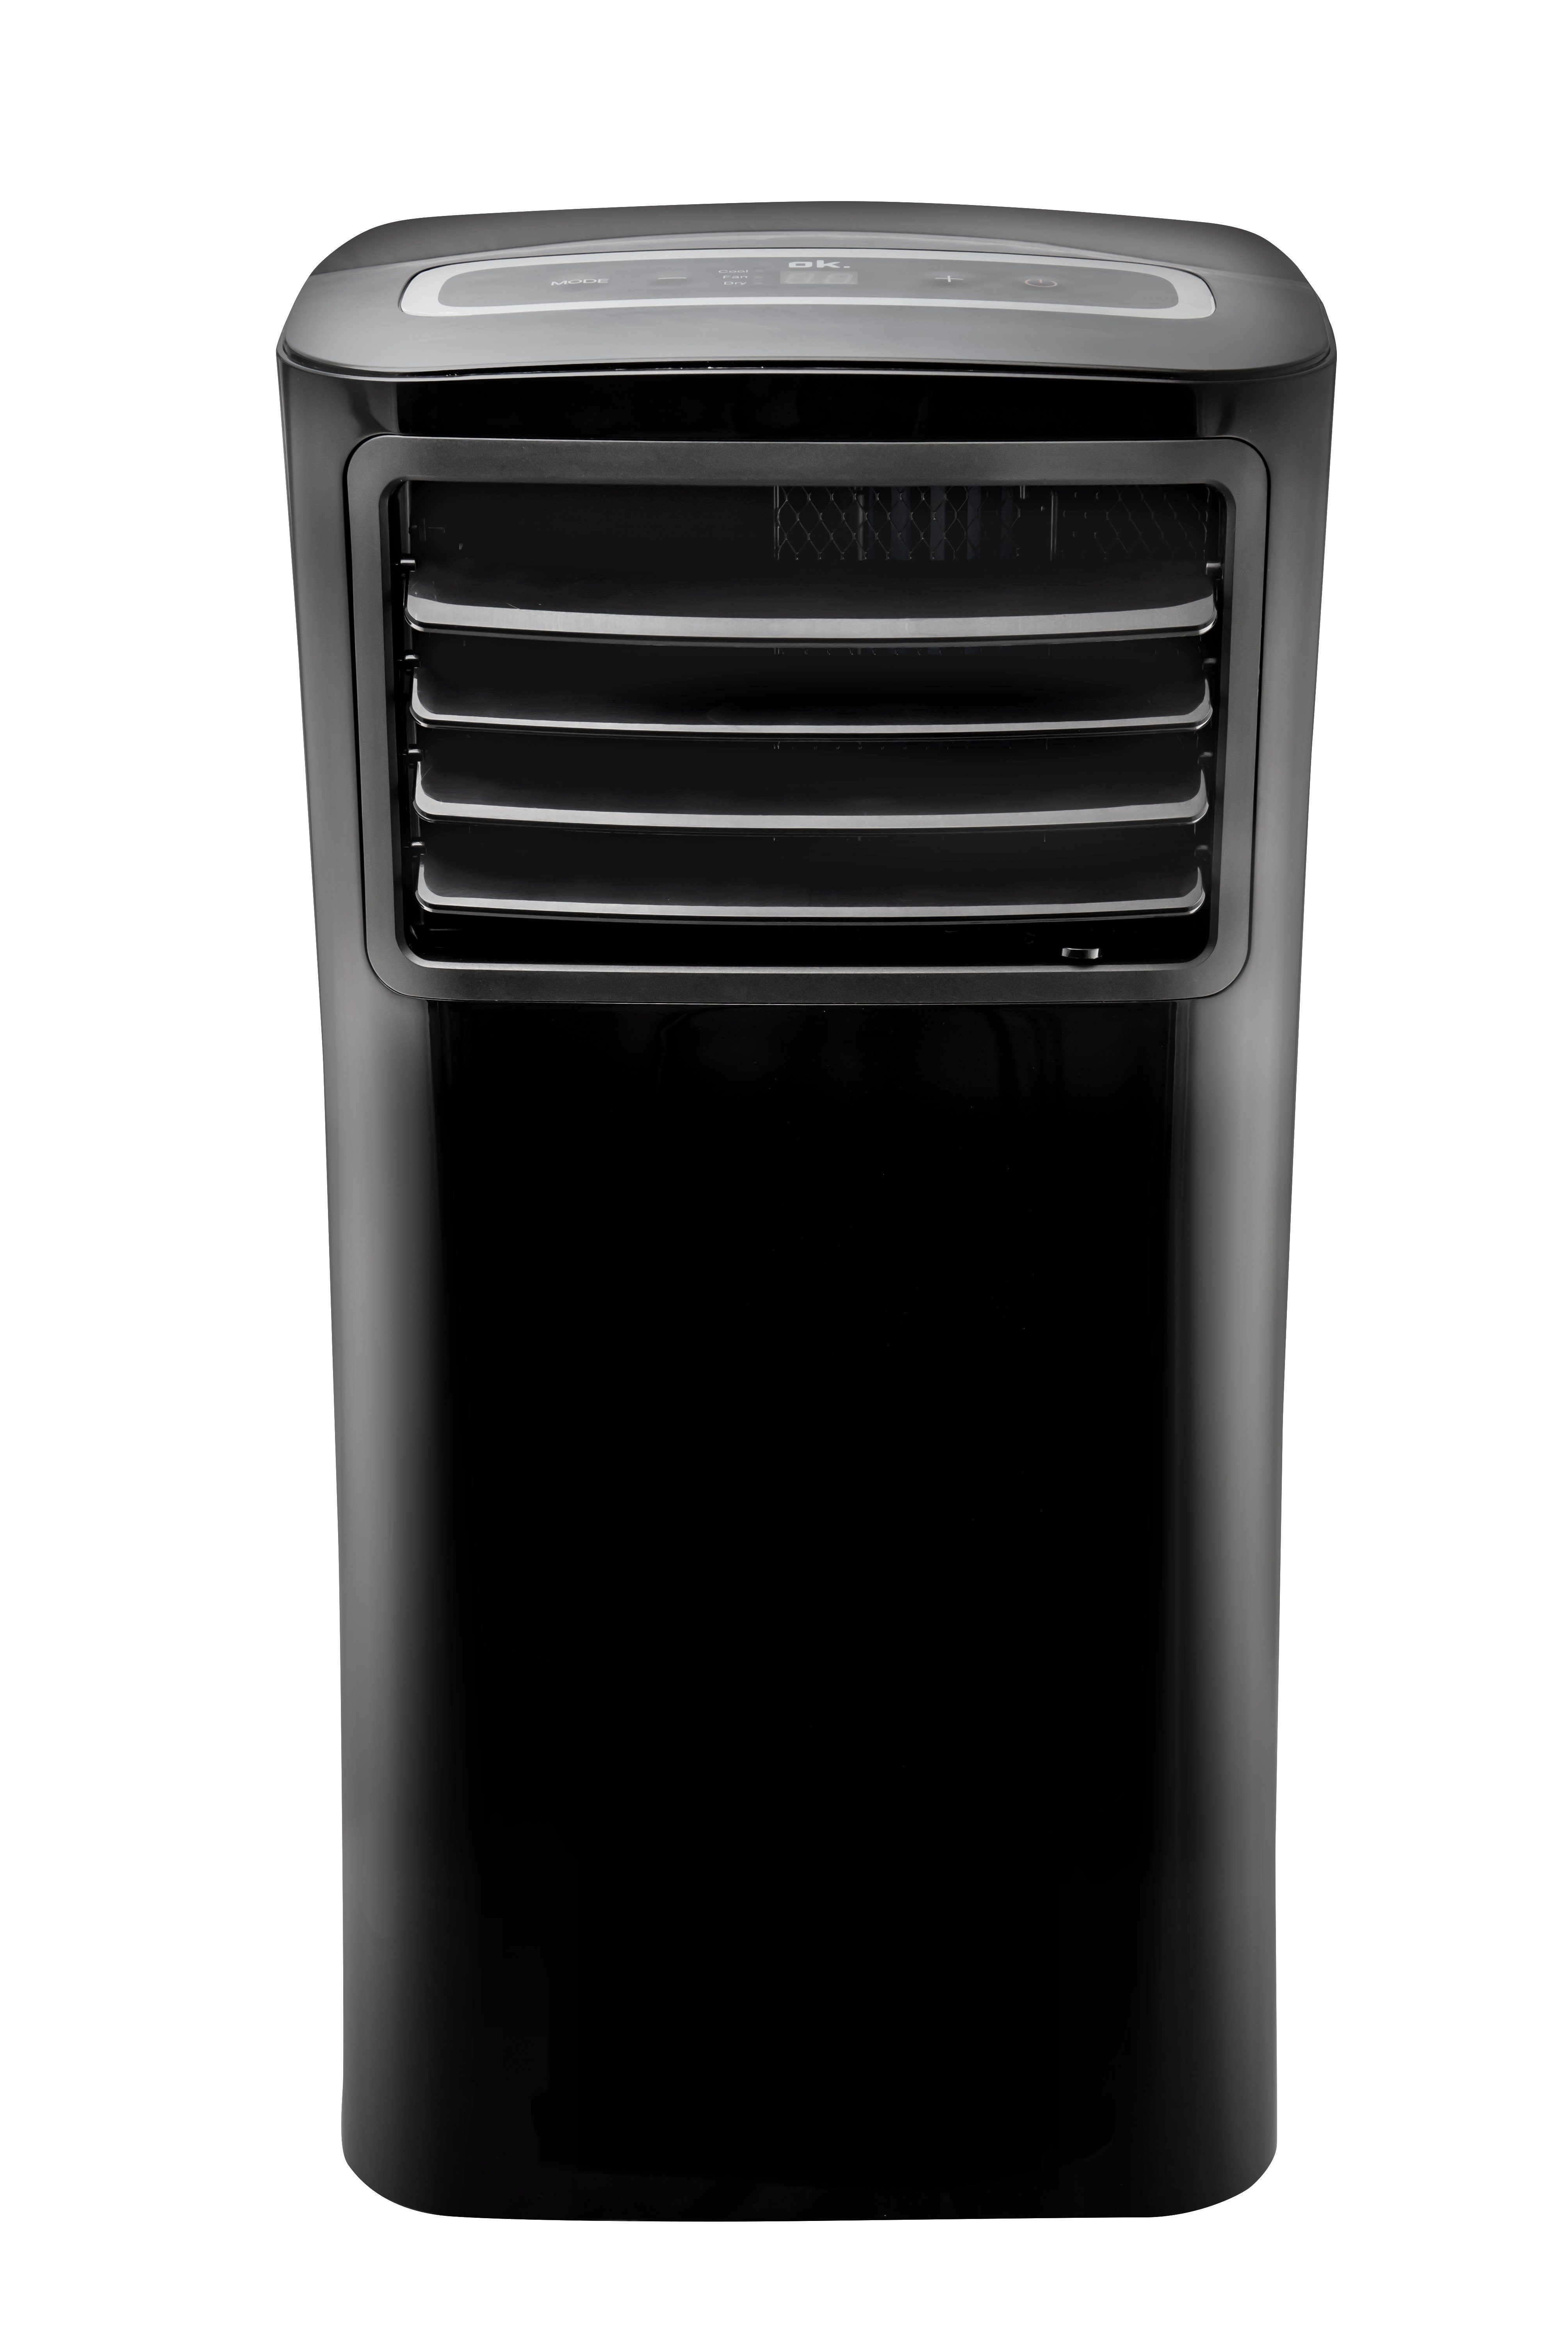 OK Ventilatorkombigerät Mobiles Klimagerät schwarz